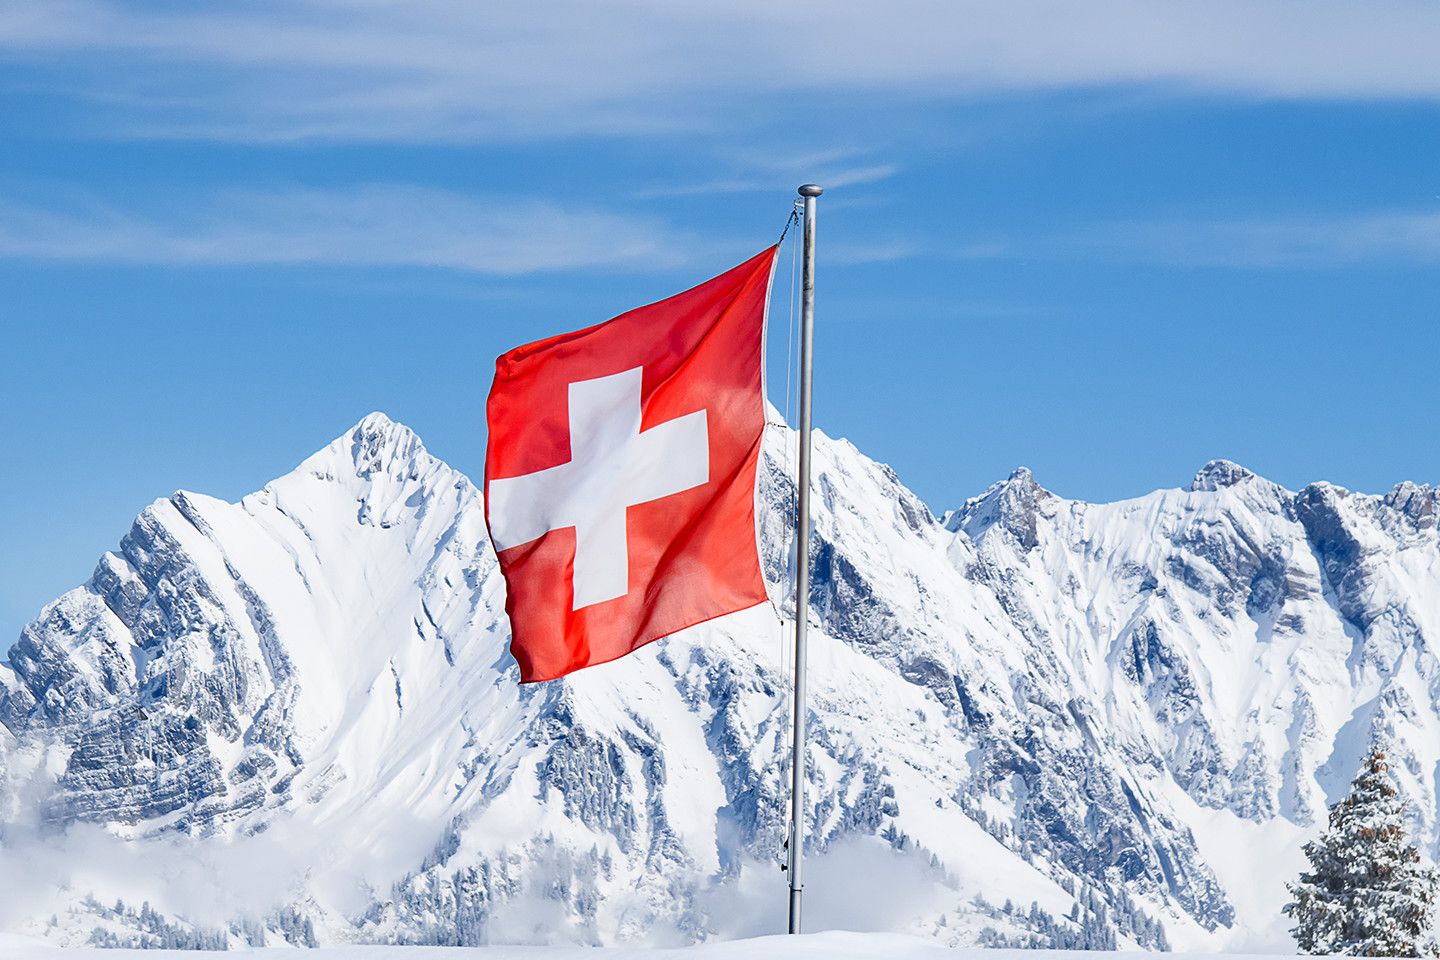 Switzerland: A hospitality hotspot?